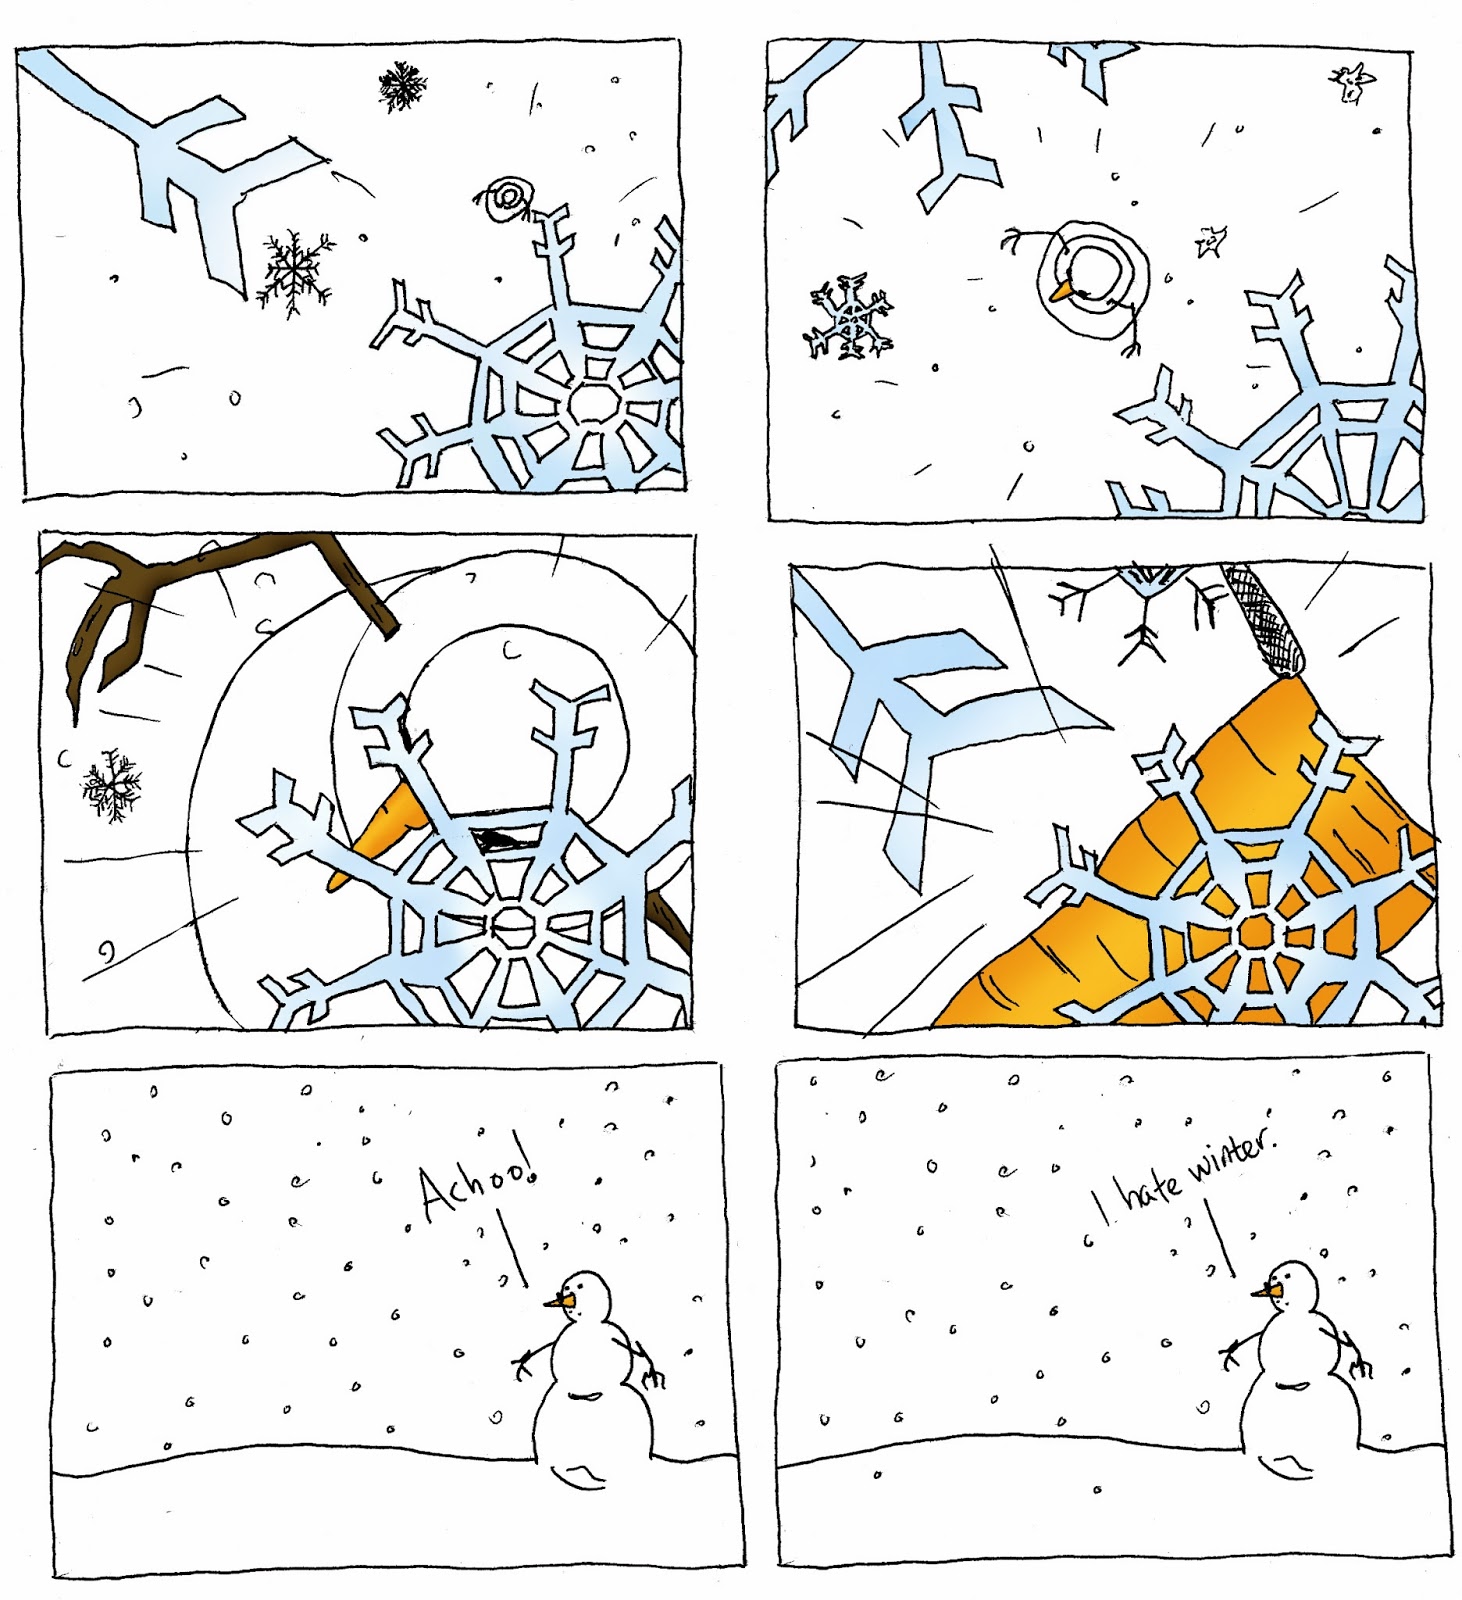 Michael Oshins Snowmen comic # 100.jpg